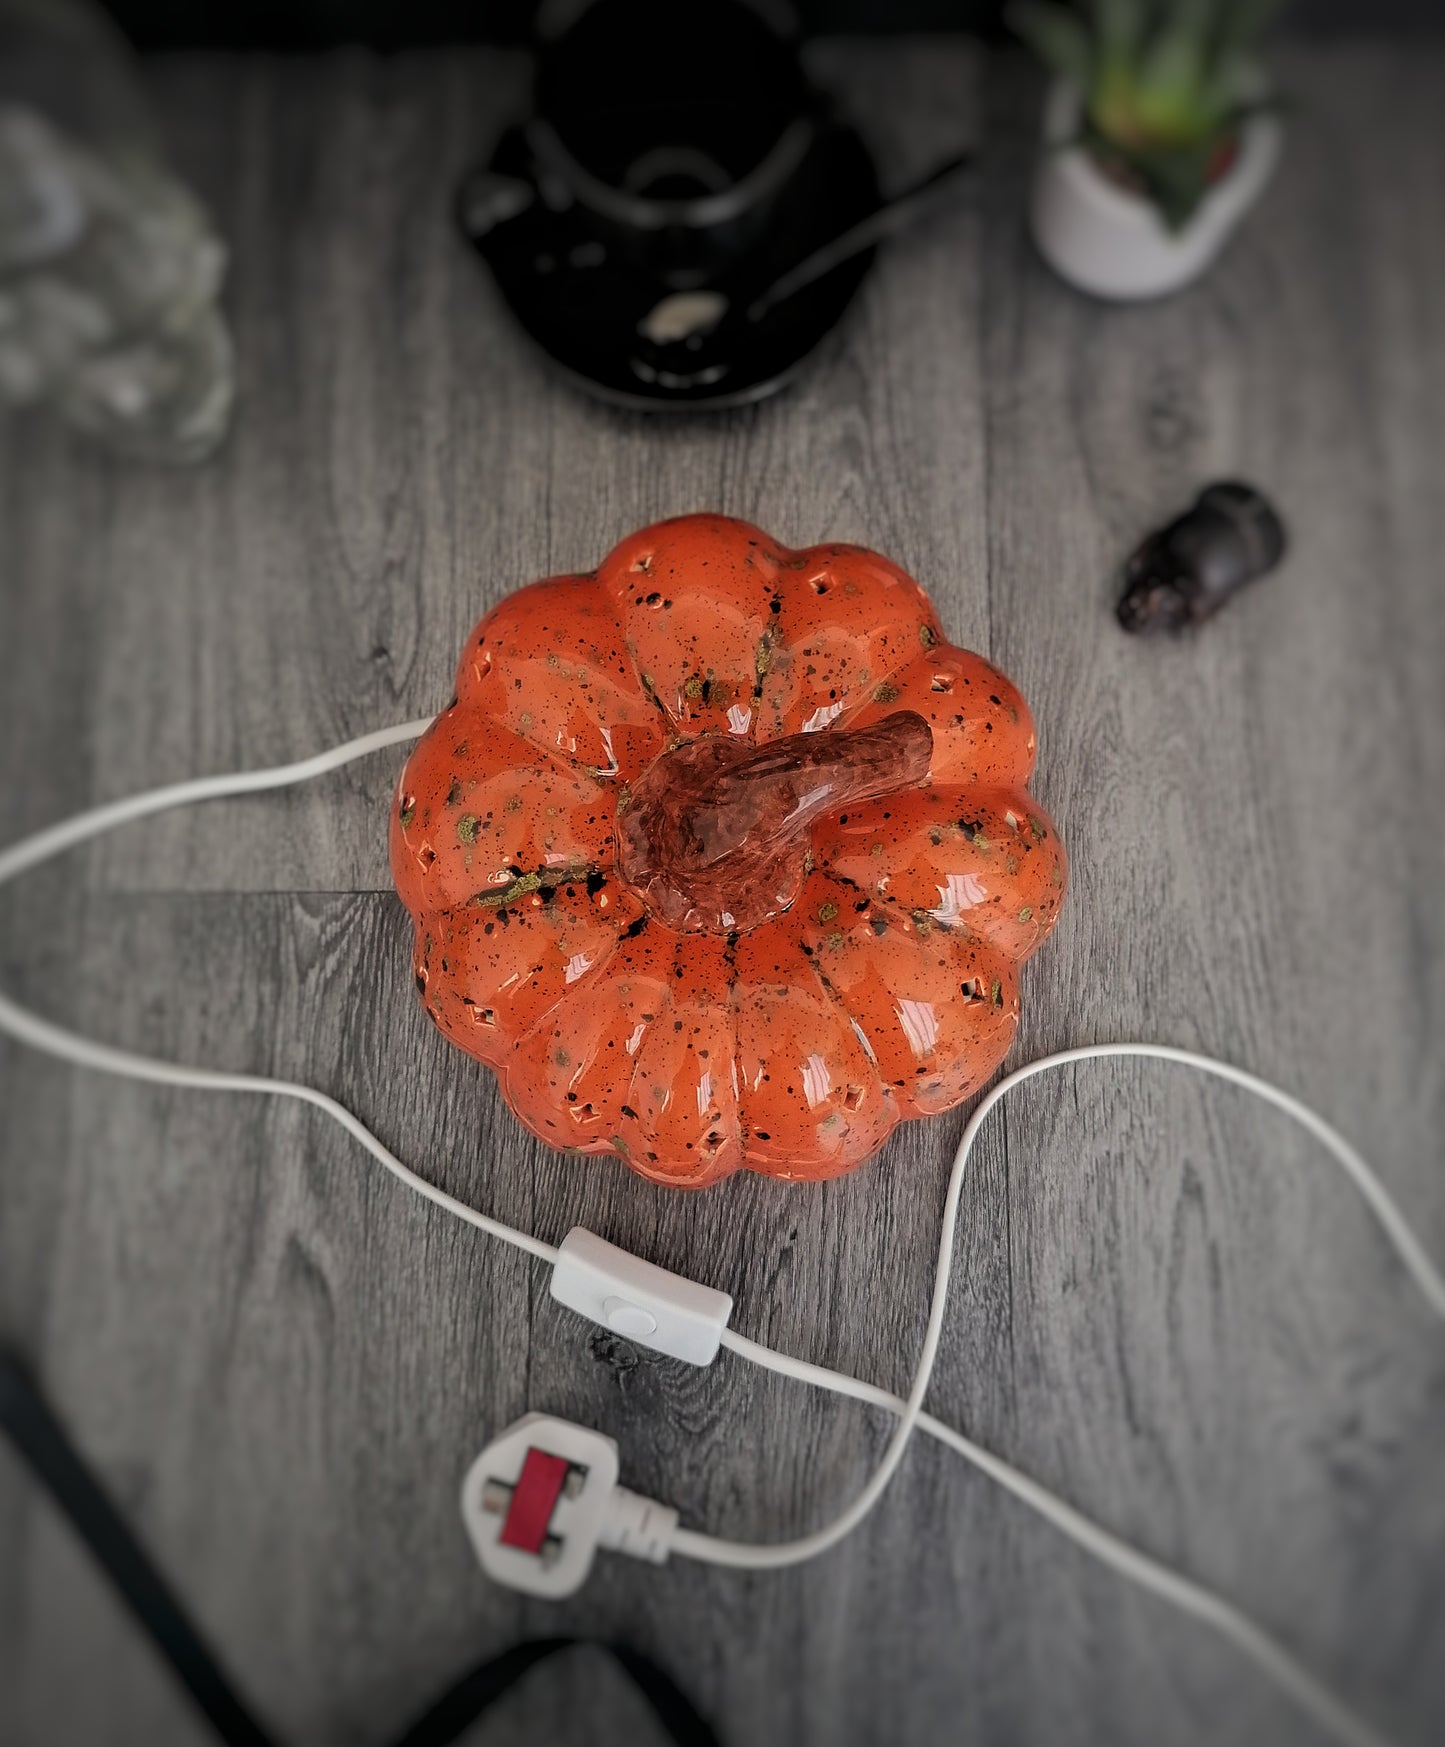 The Mouldy Pumpkin Lantern